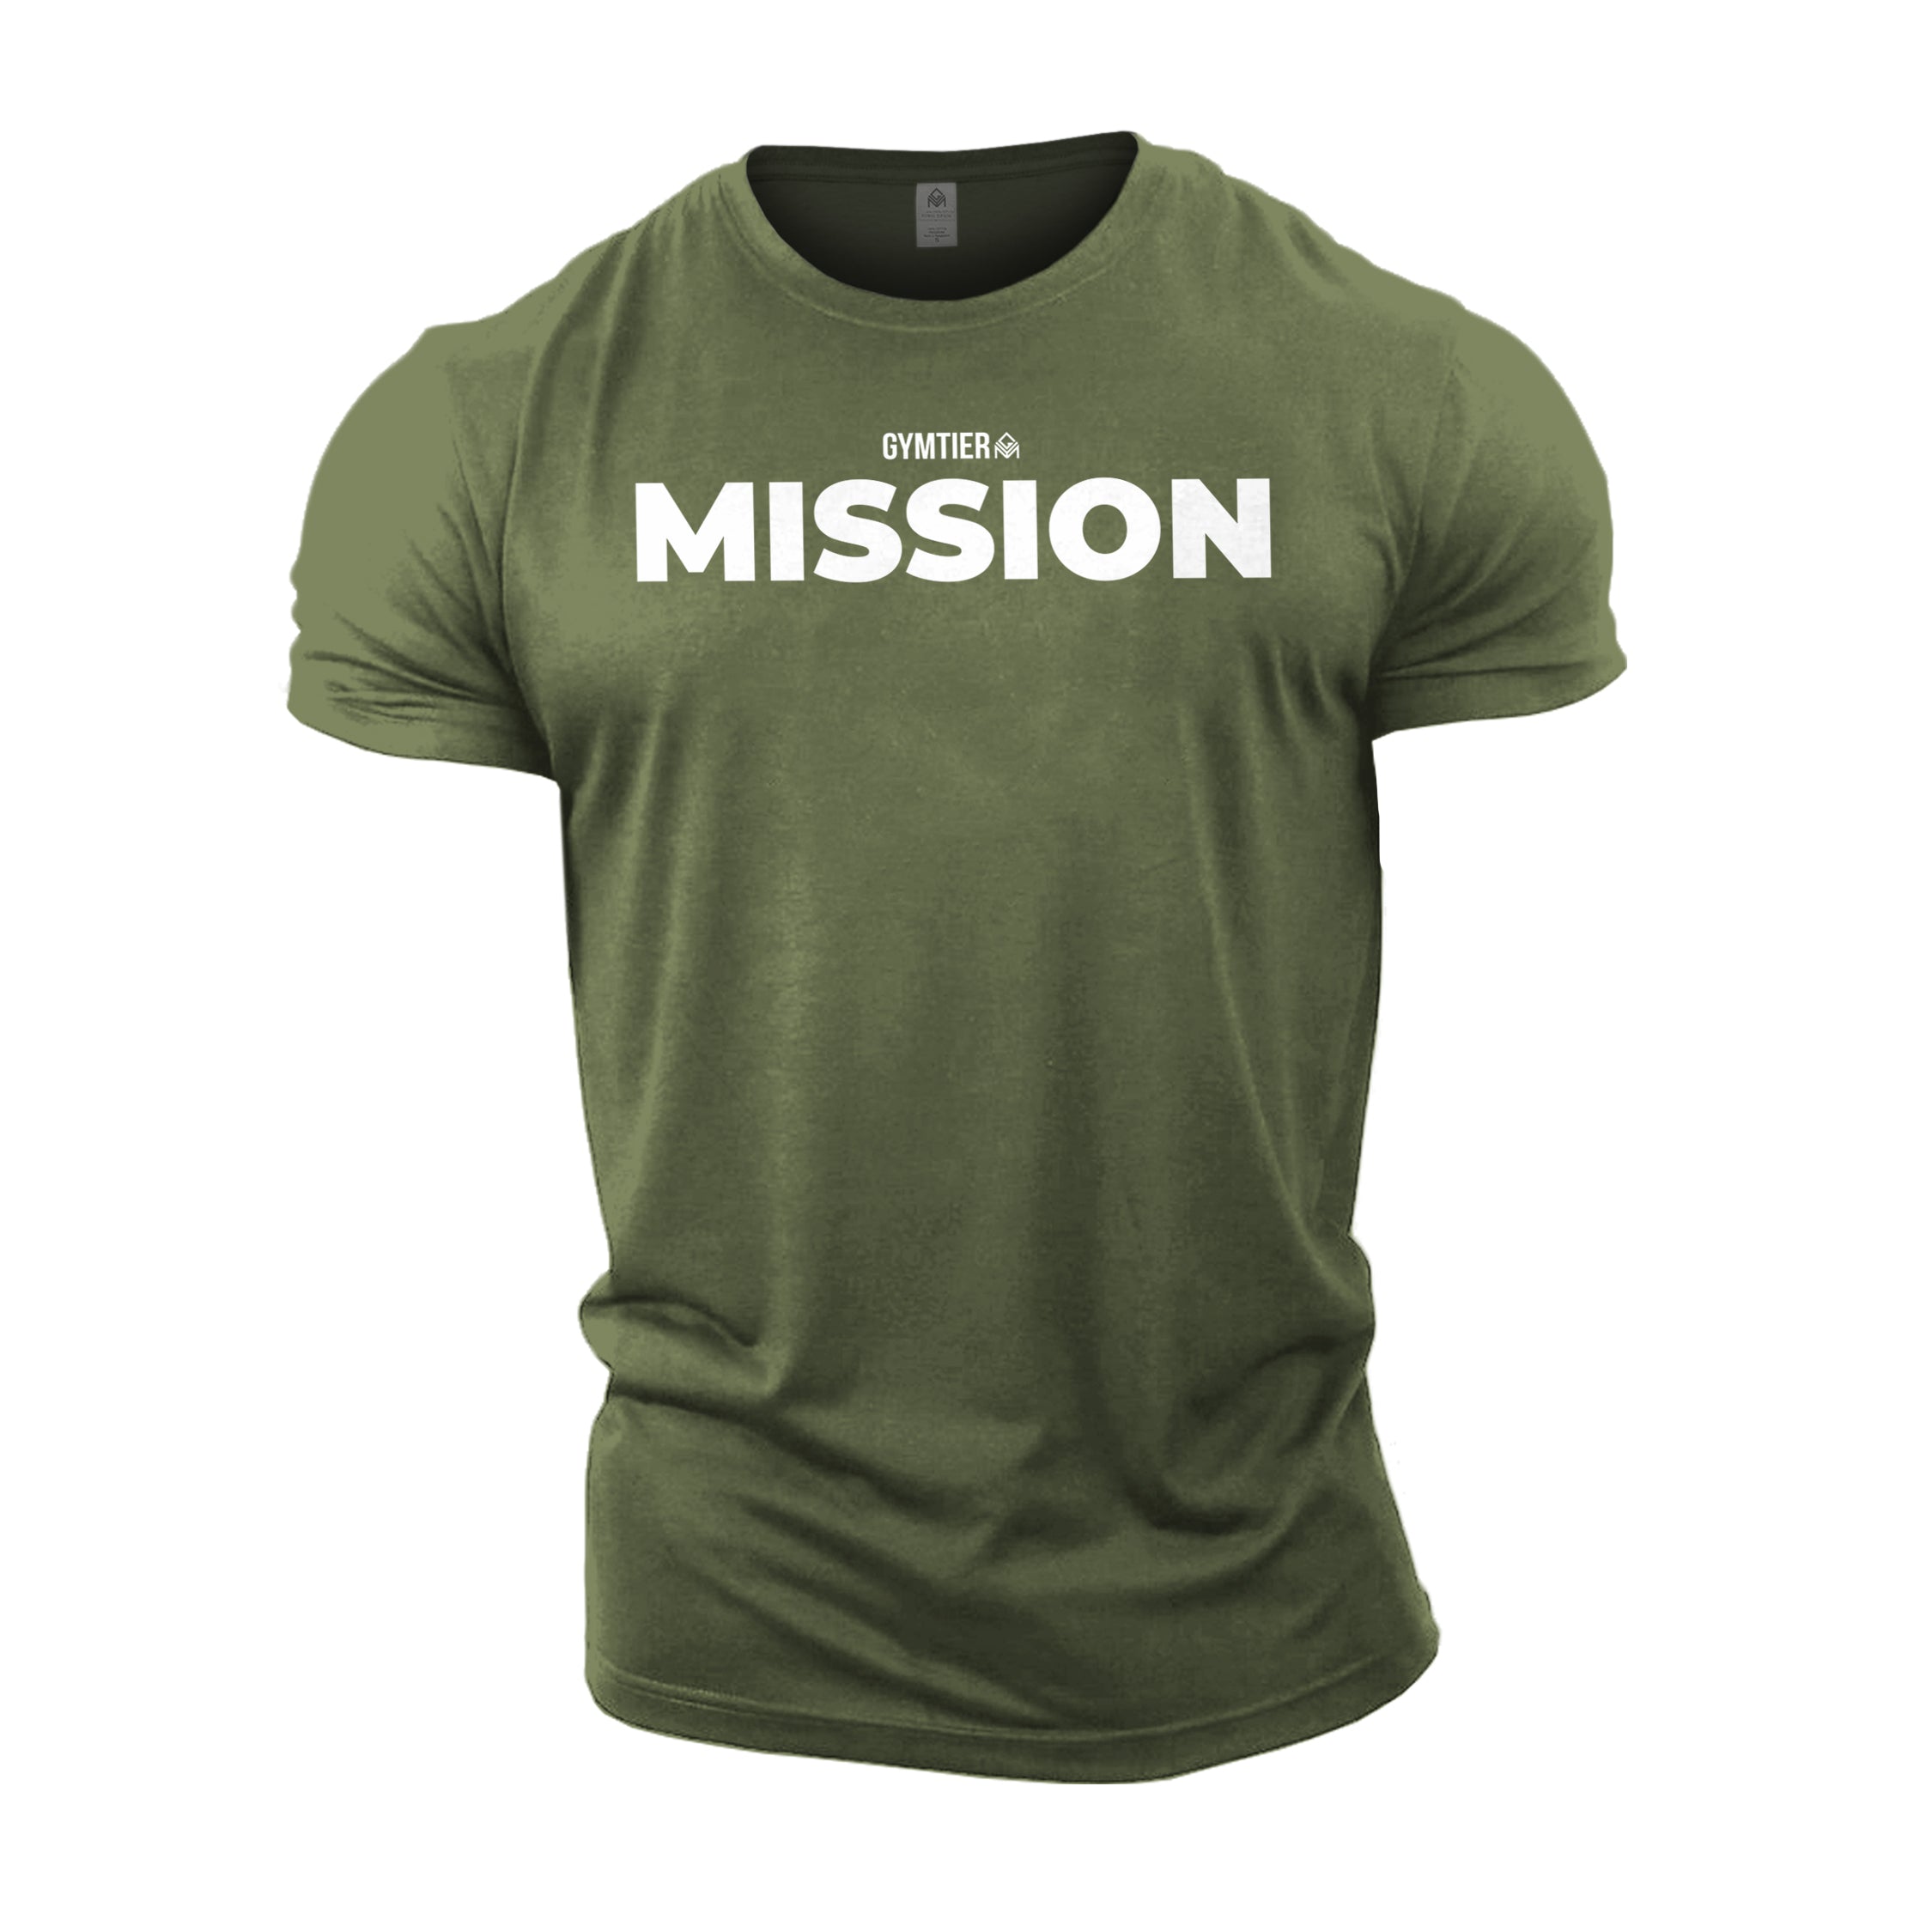 GYMTIER Mission T-Shirt